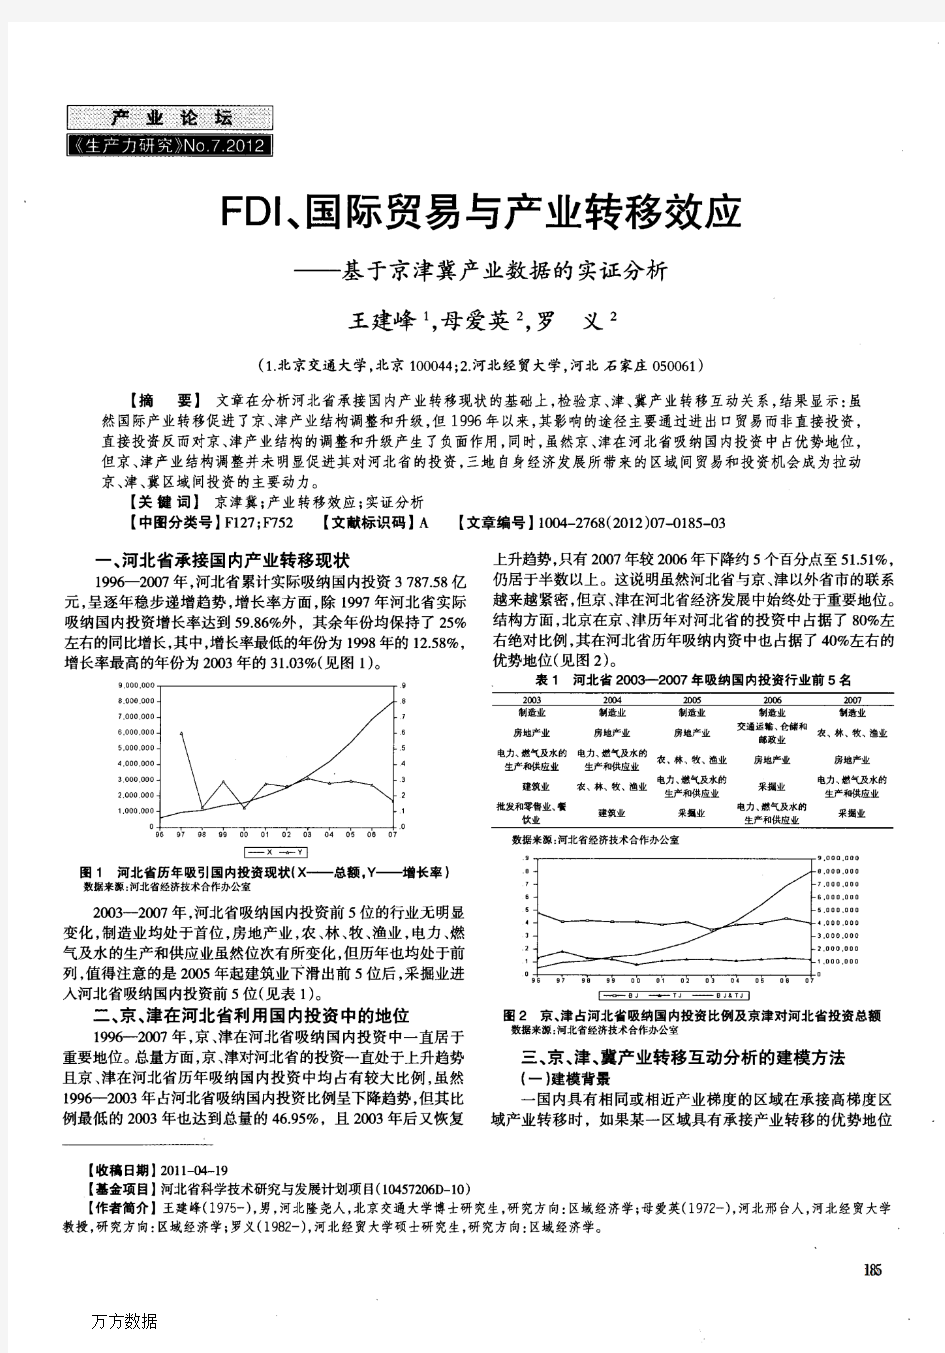 FDI、国际贸易与产业转移效应——基于京津冀产业数据的实证分析